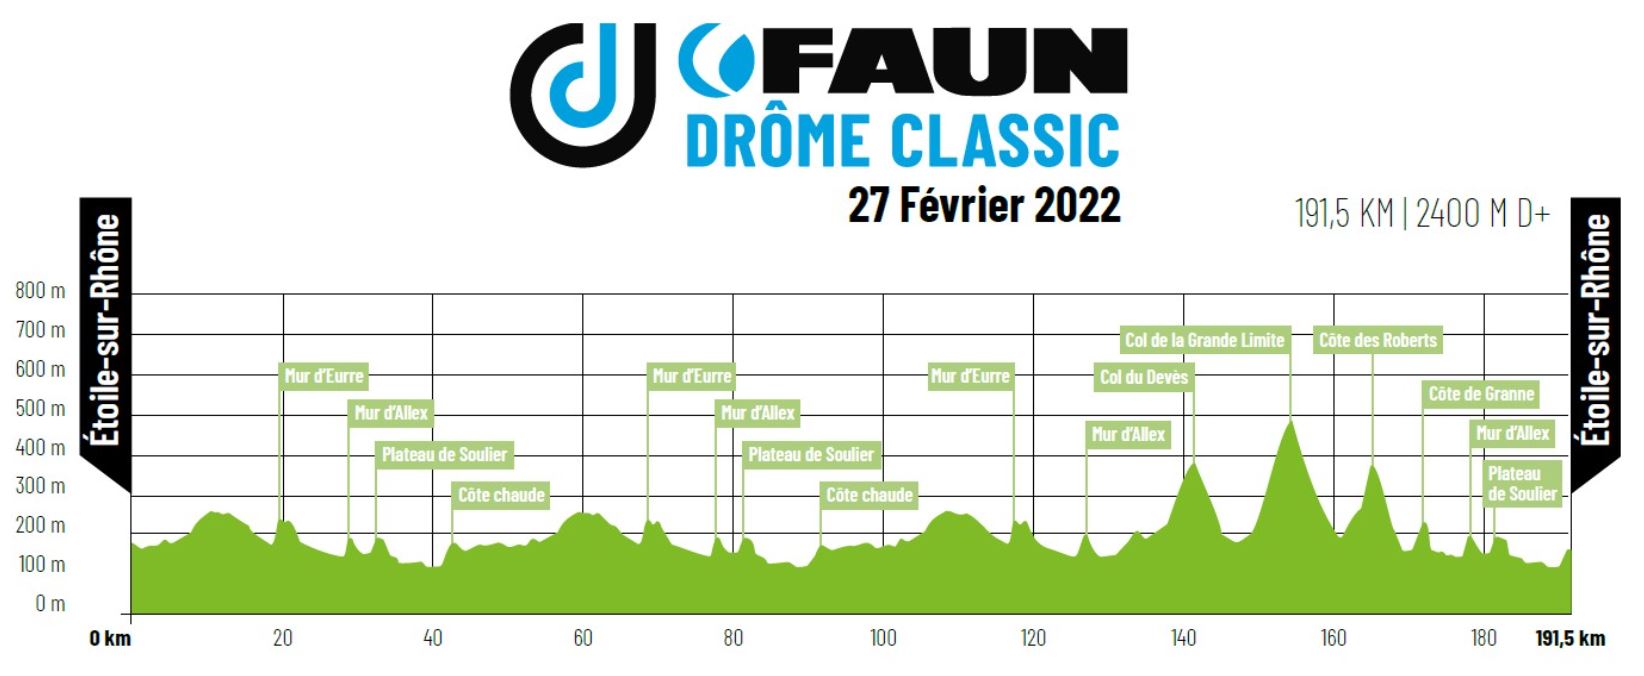 Faun Drôme Classic 2022 TV Streaming Profil